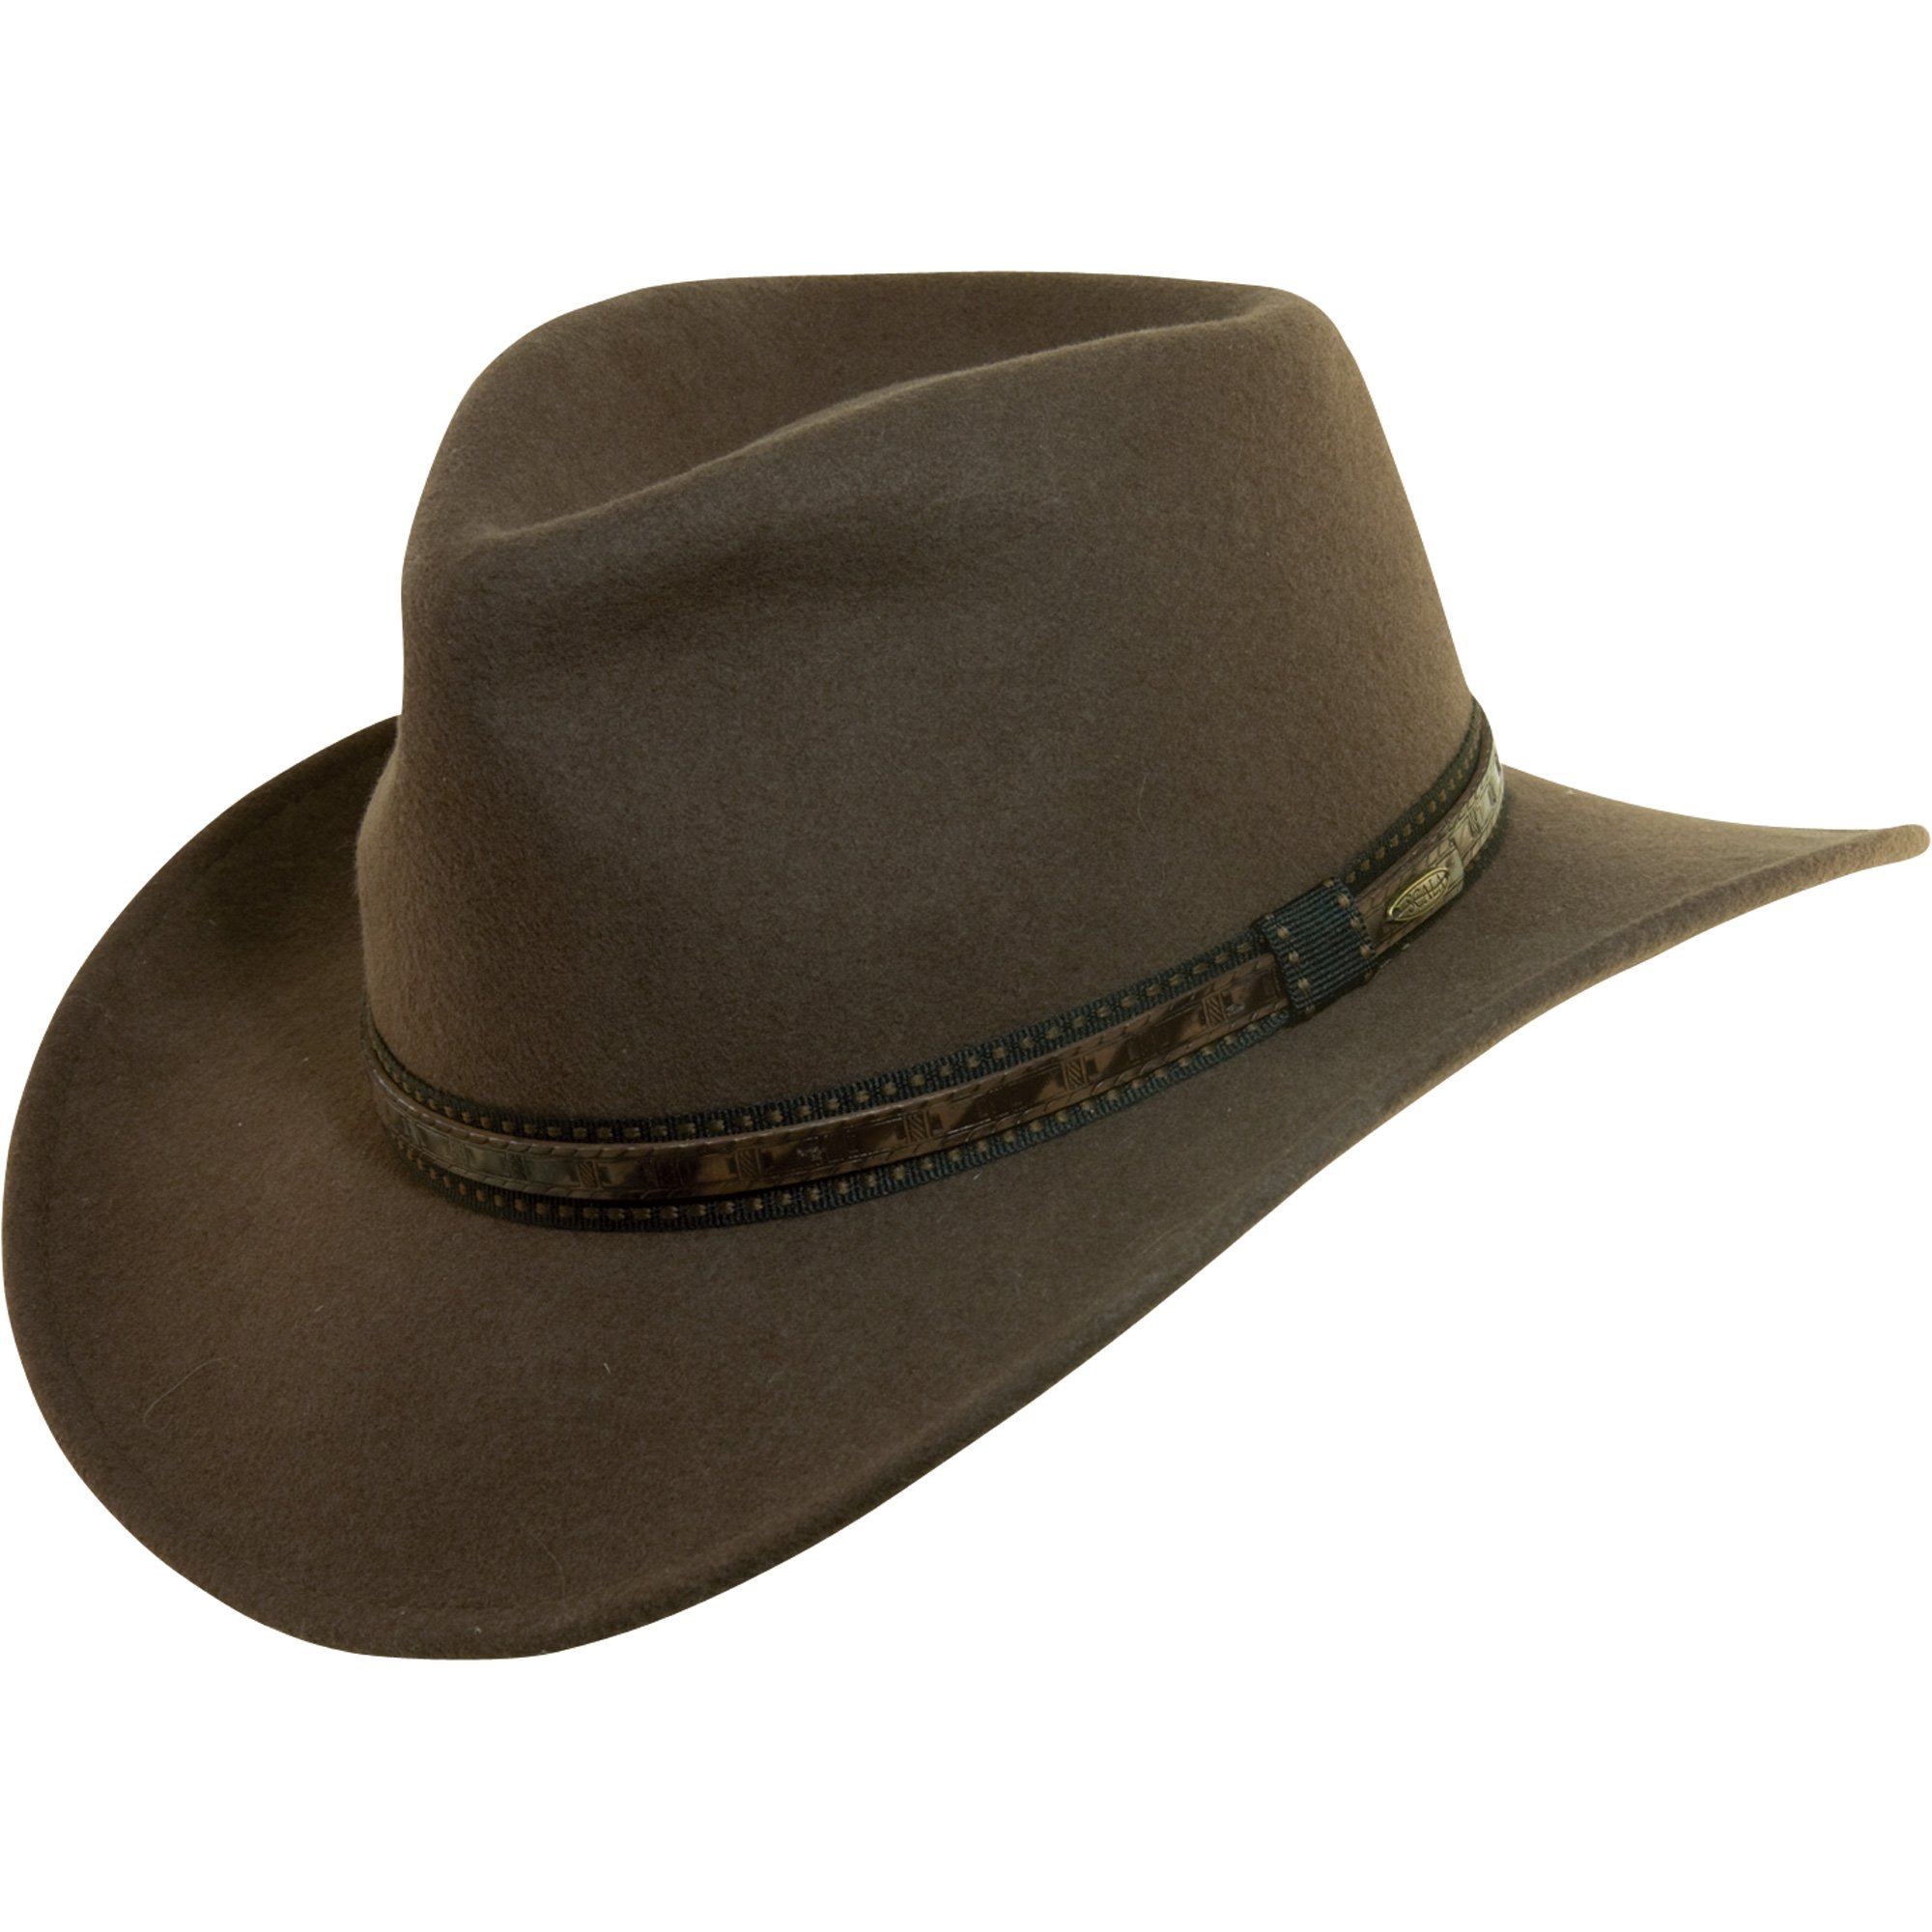 Cowboy Hat by Dorfman Pacific Co.